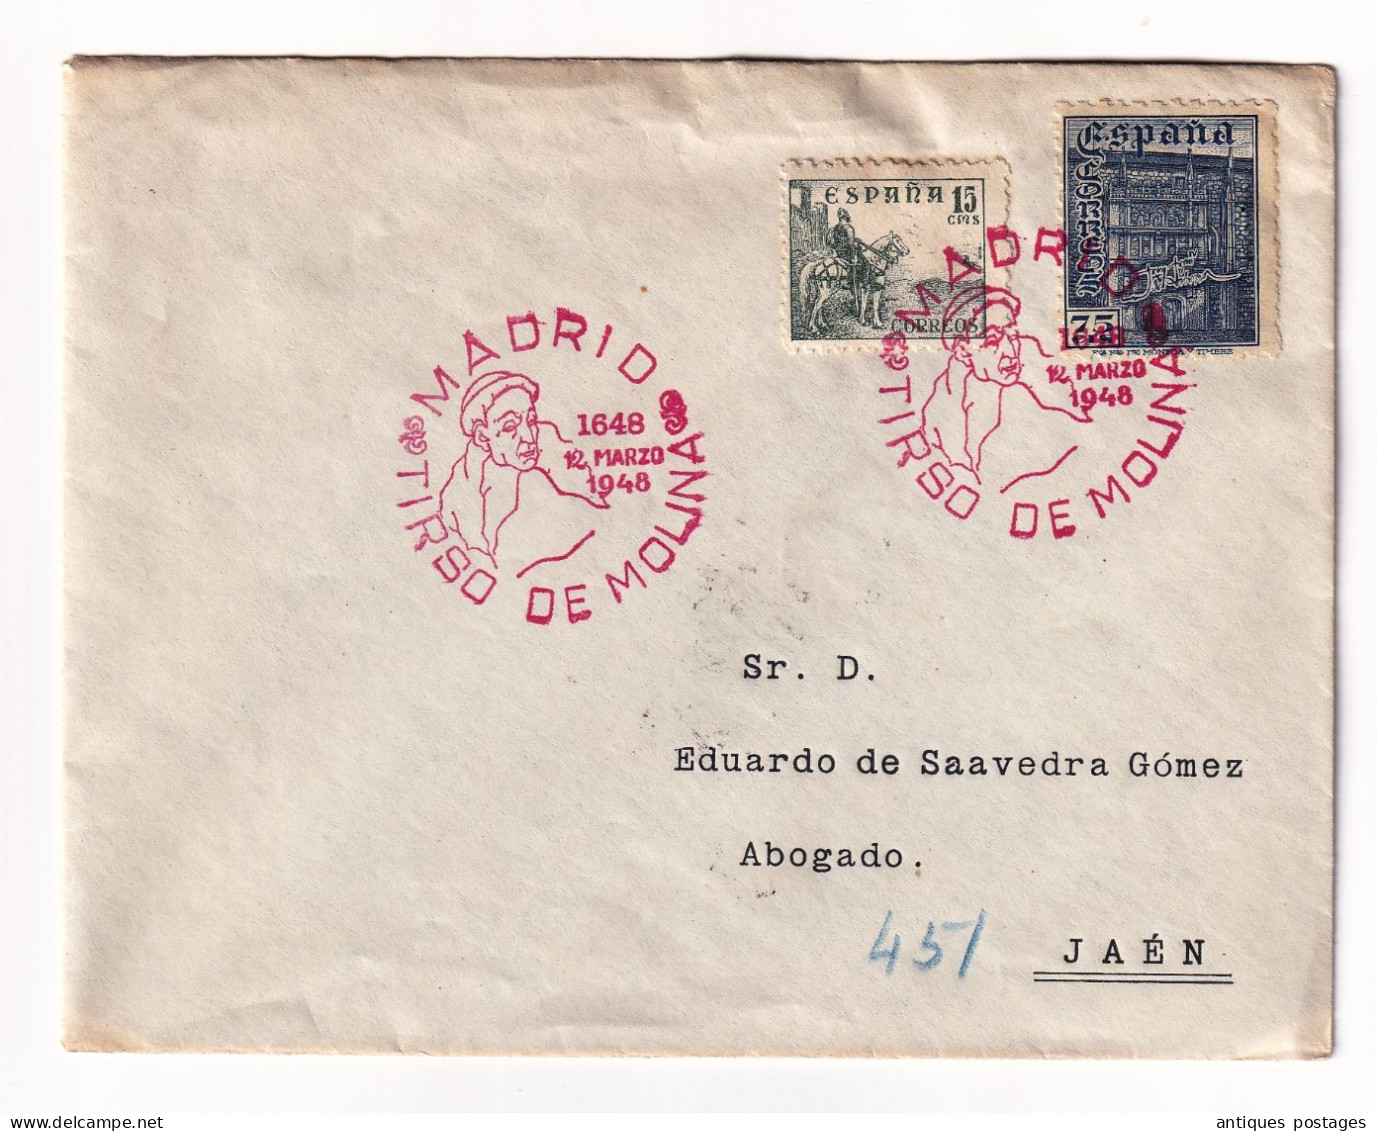 Lettres 12 Marso 1948 Espagne Madrid Matasello Tirso De Molina Certificado Jaén - Covers & Documents